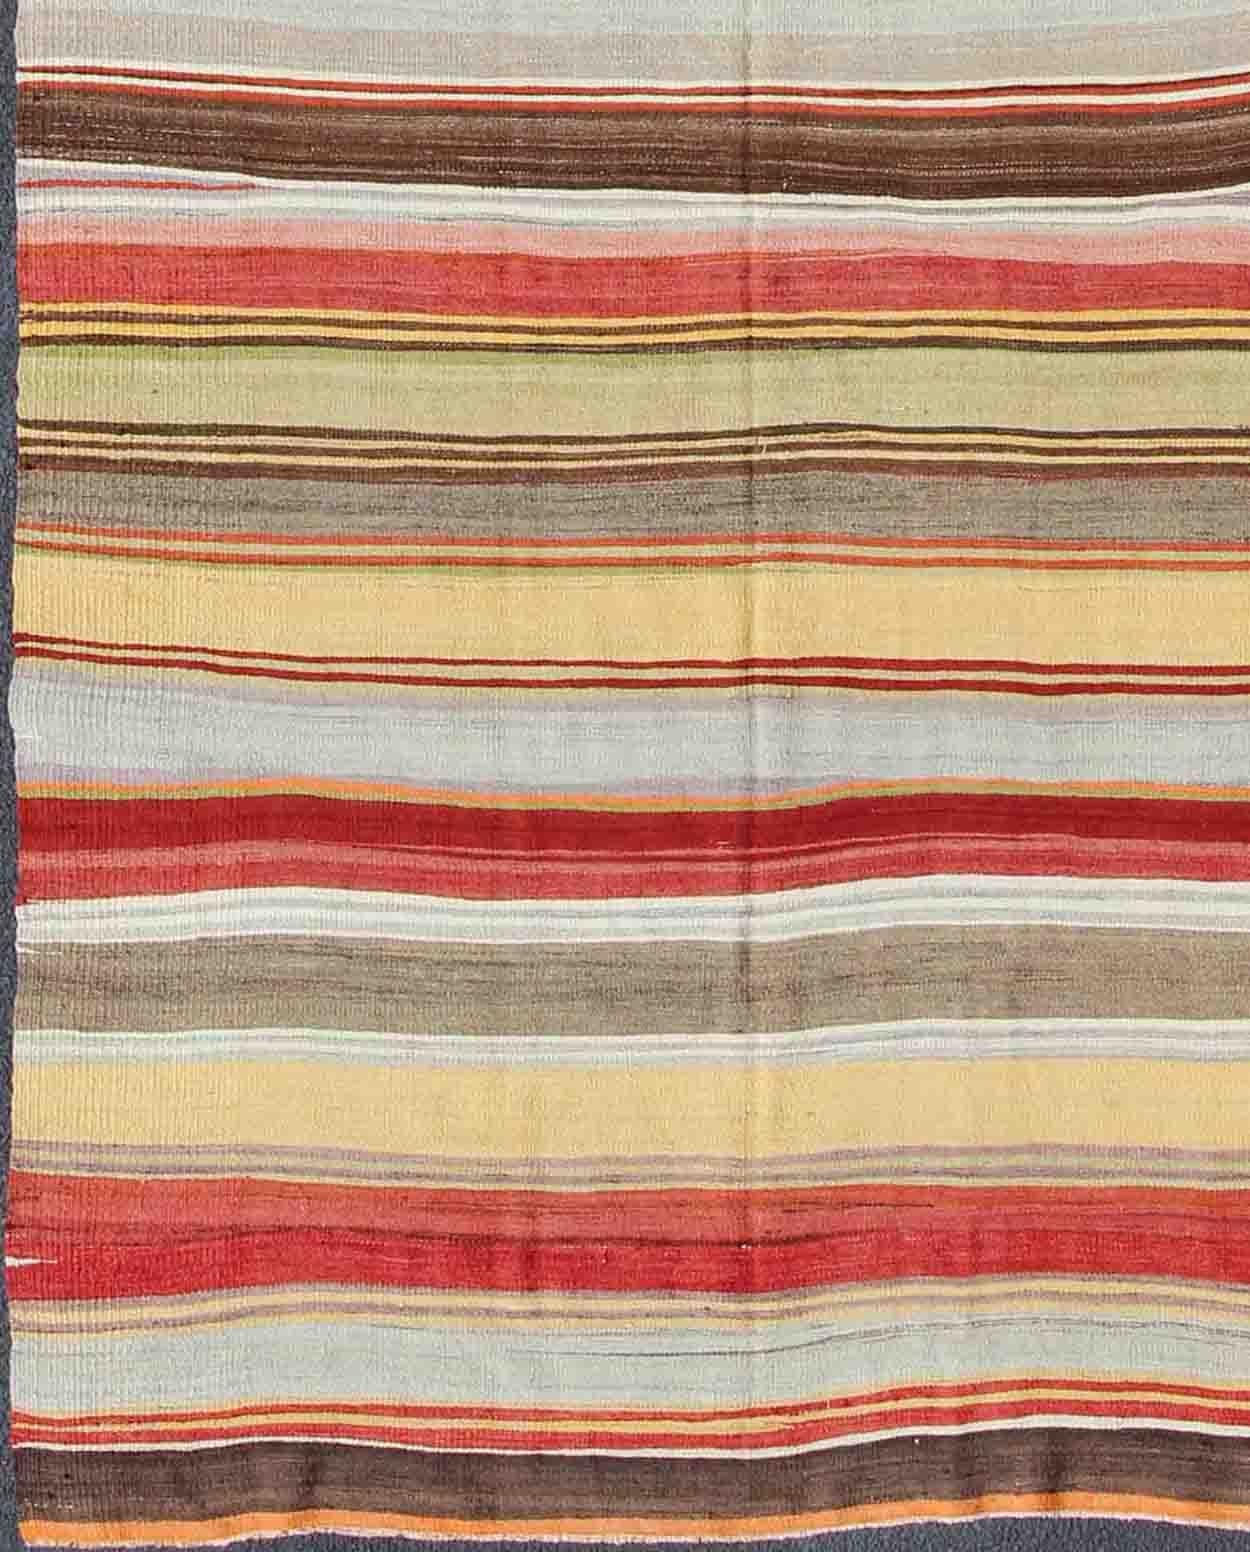 Large Gallery Kilim Flat-Weave Runner with Horizontal Stripe Design, Keivan Woven Arts/ rug mtu-95041, country of origin / type: Turkey / Kilim, circa mid-20th century

Measures: 6'2 x 14'

Featuring a repeating horizontal stripe design, this unique